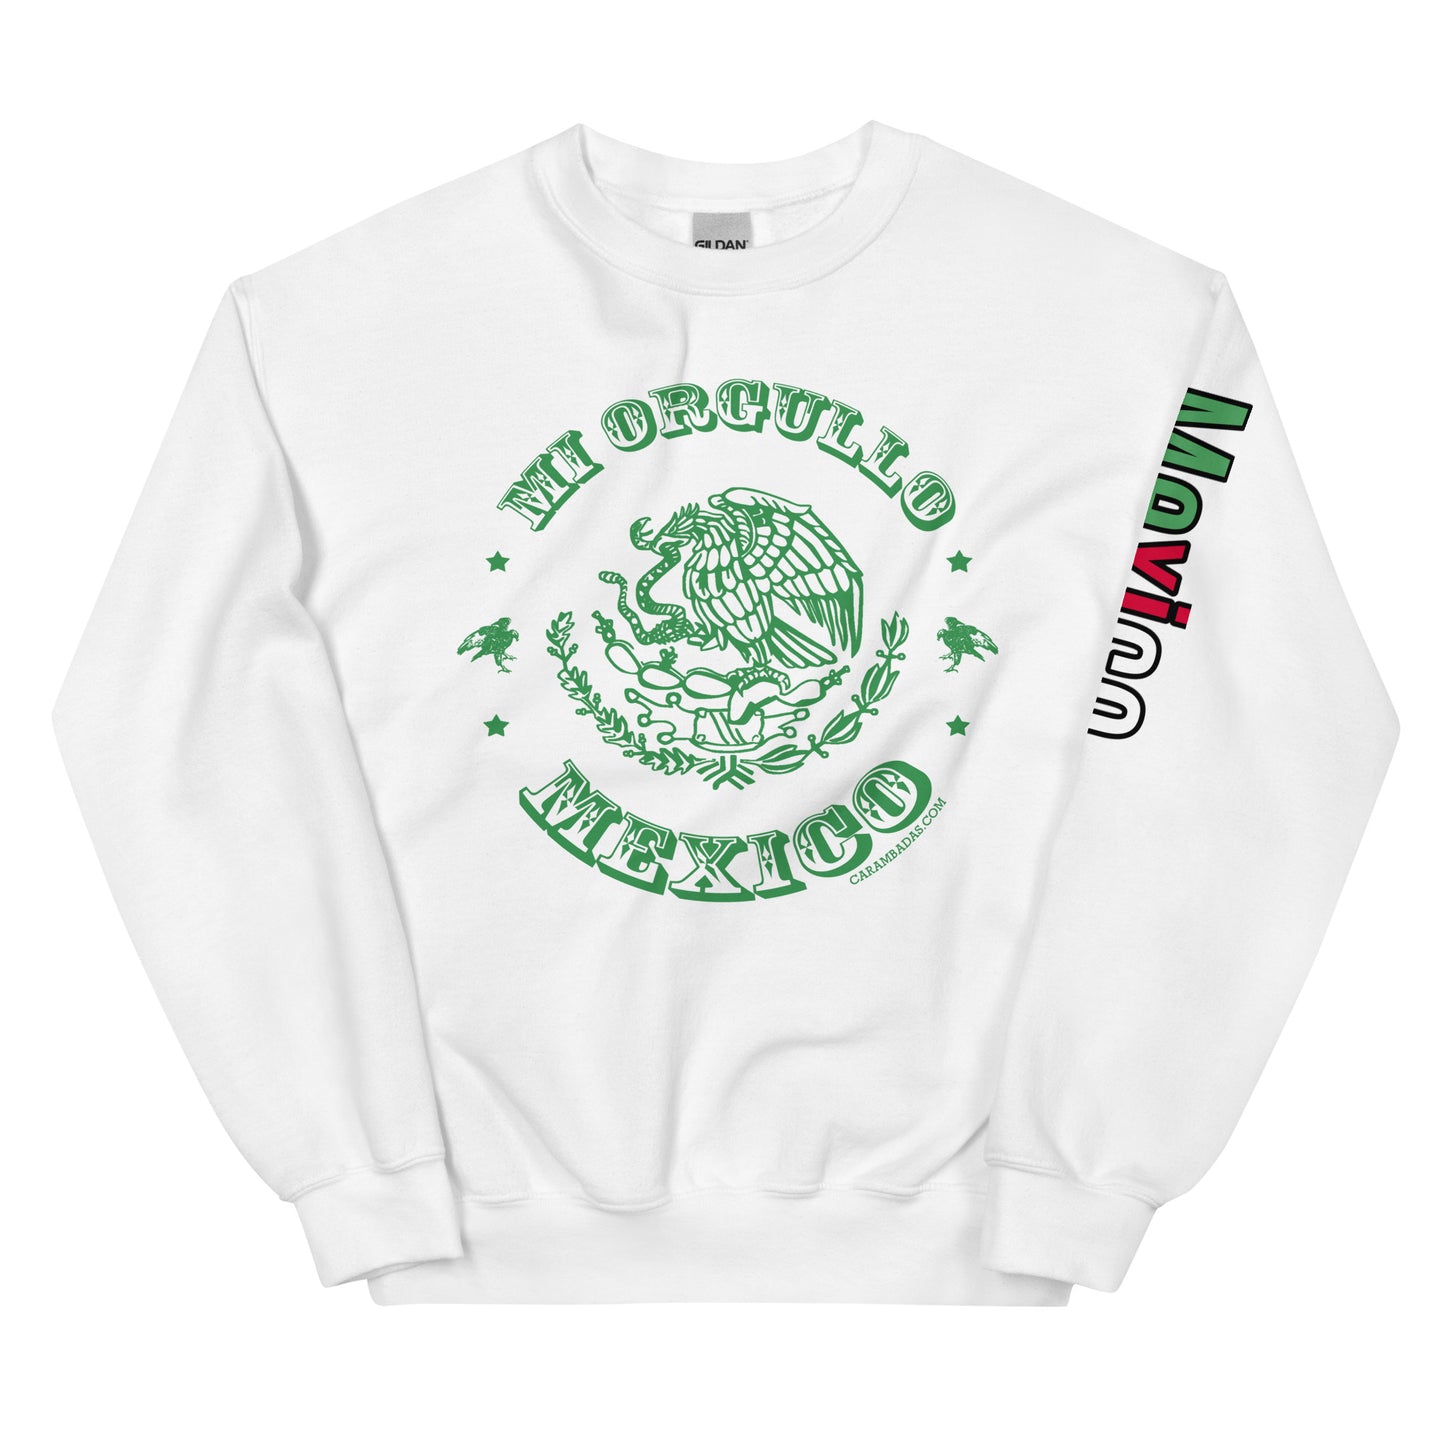 Plus Size Mi Orgullo Mexico Unisex Sweatshirt